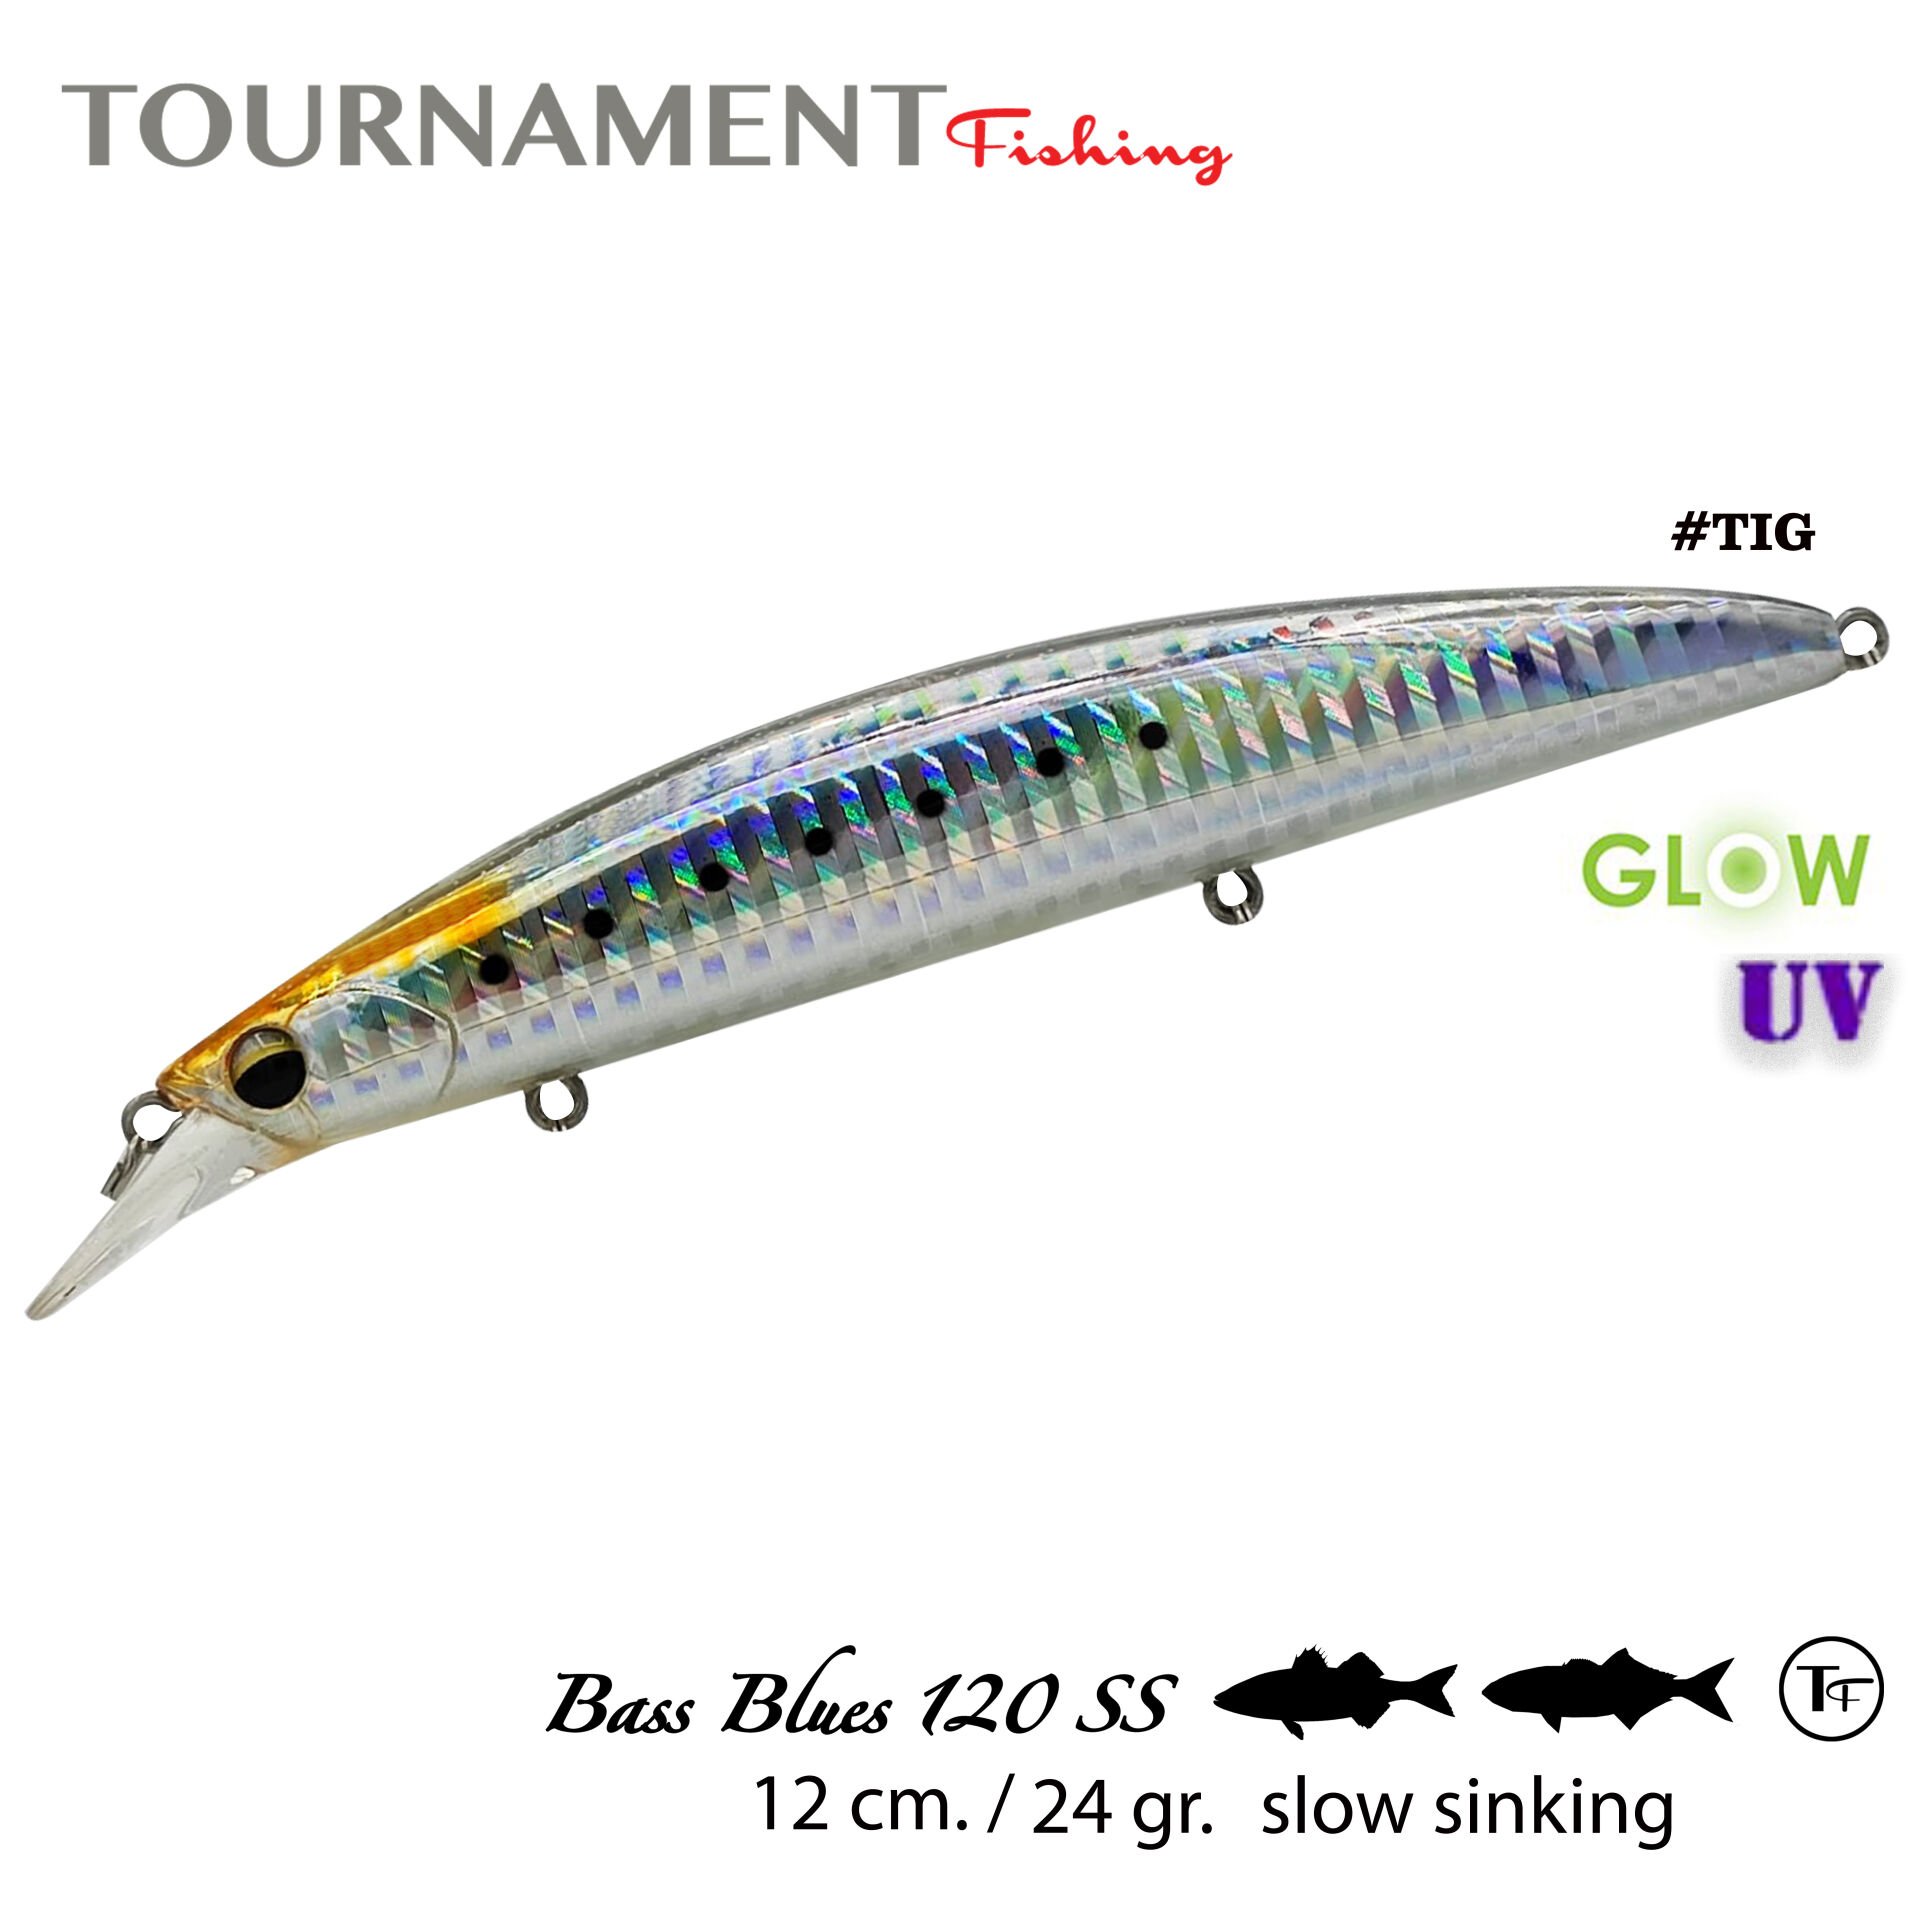 Tournament fishing Bassblues 120 SS 120 mm 24 gr #TIG